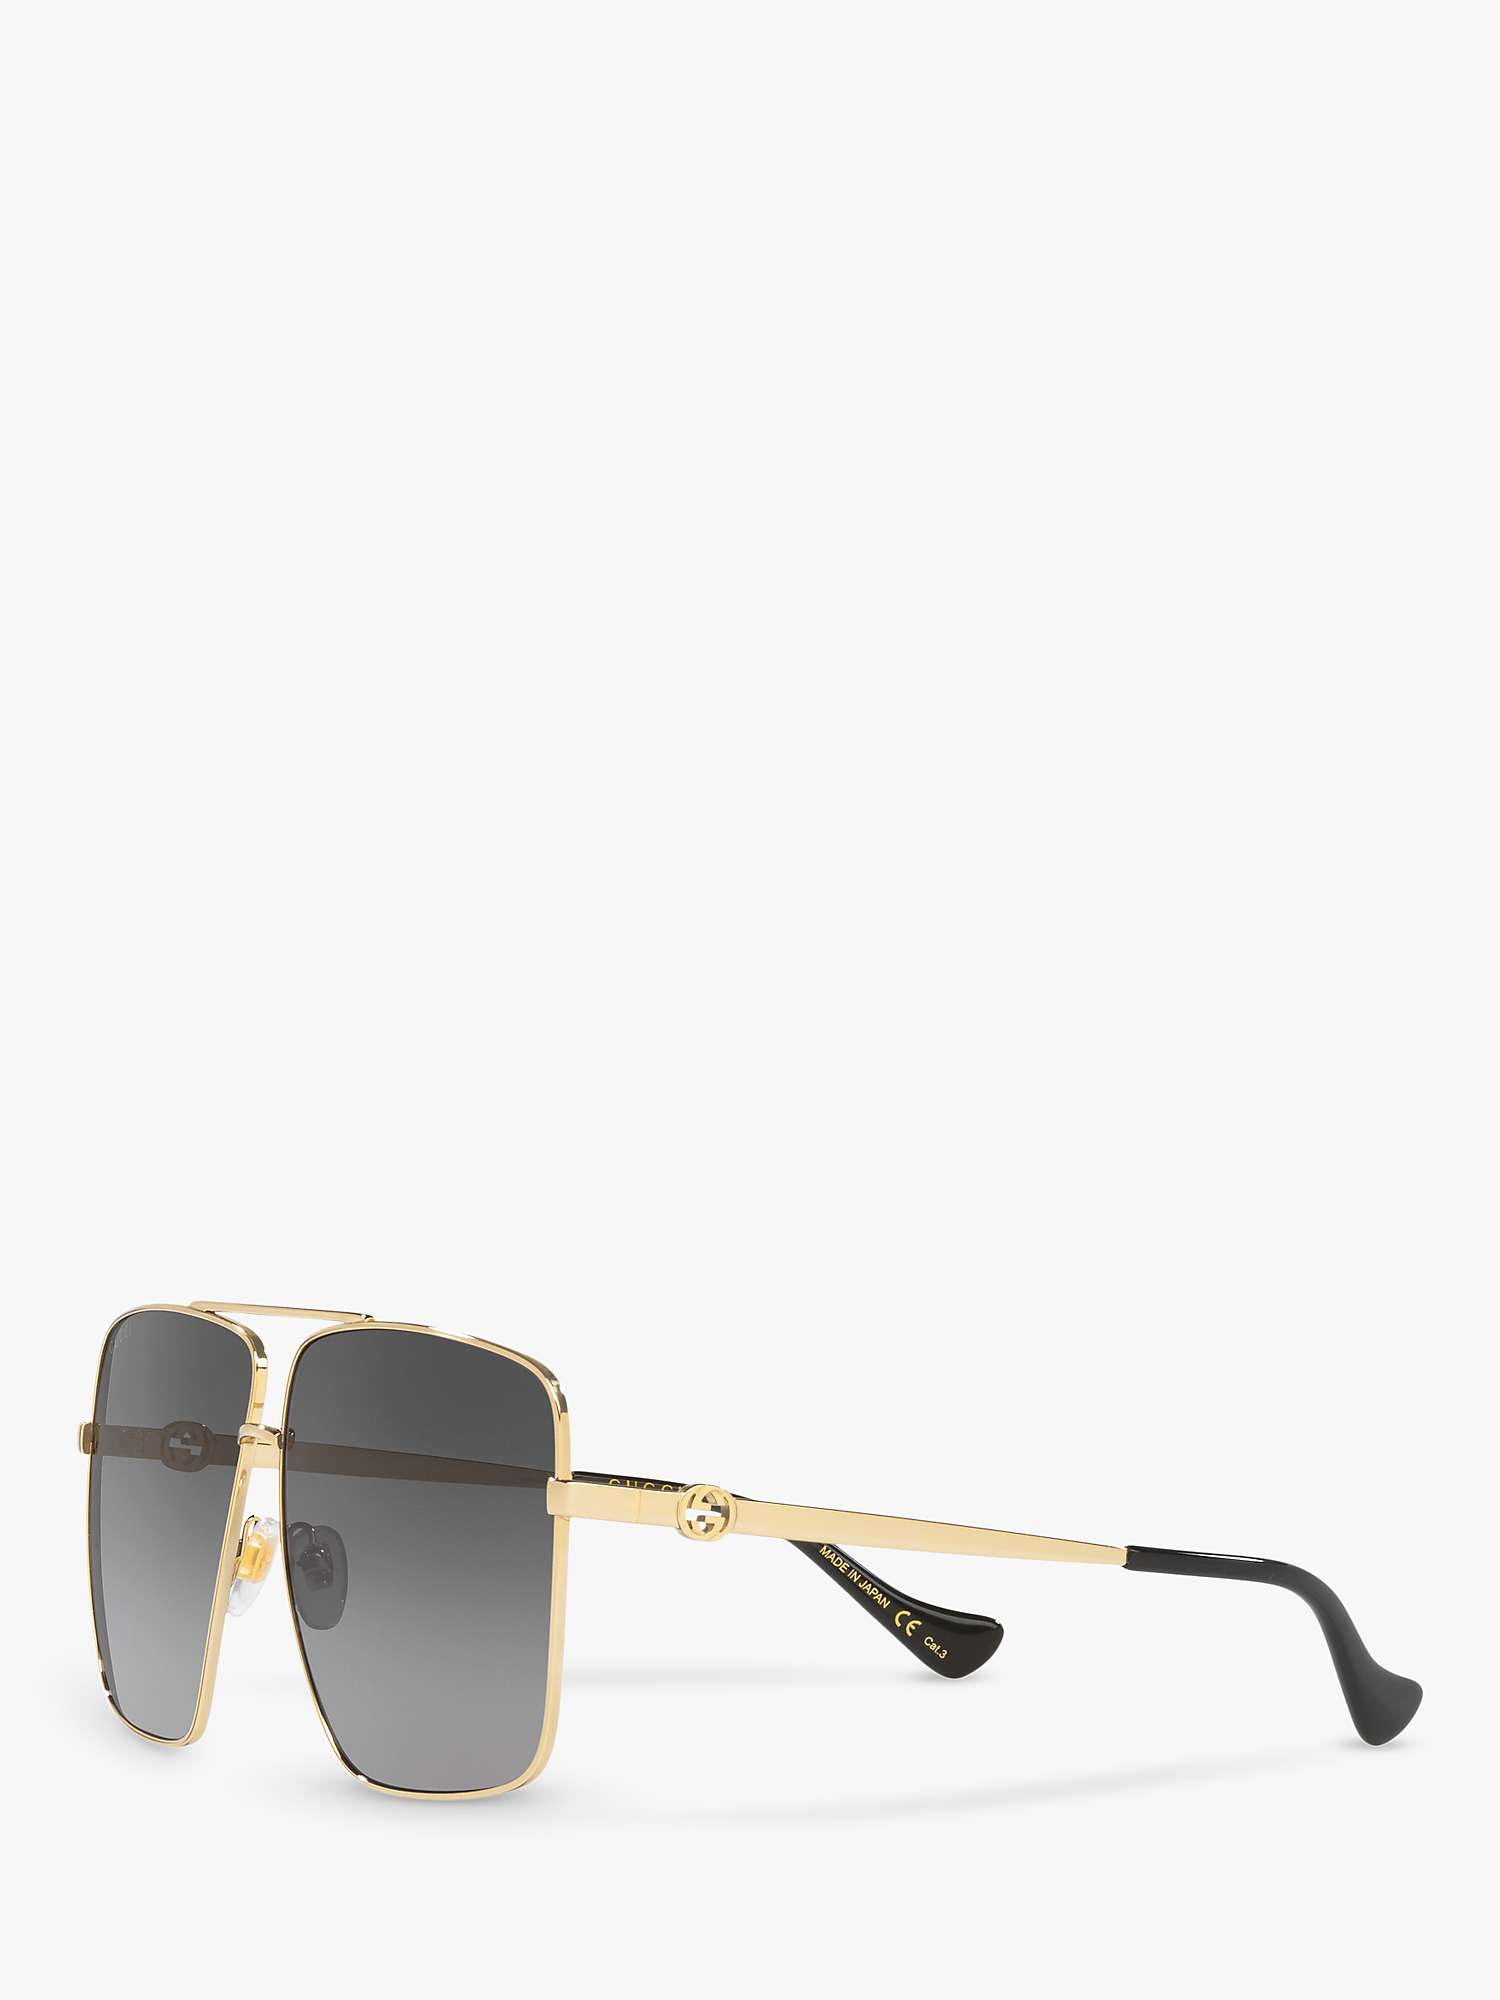 Buy Gucci GG1087S Women's Aviator Sunglasses, Gold/Grey Gradient Online at johnlewis.com